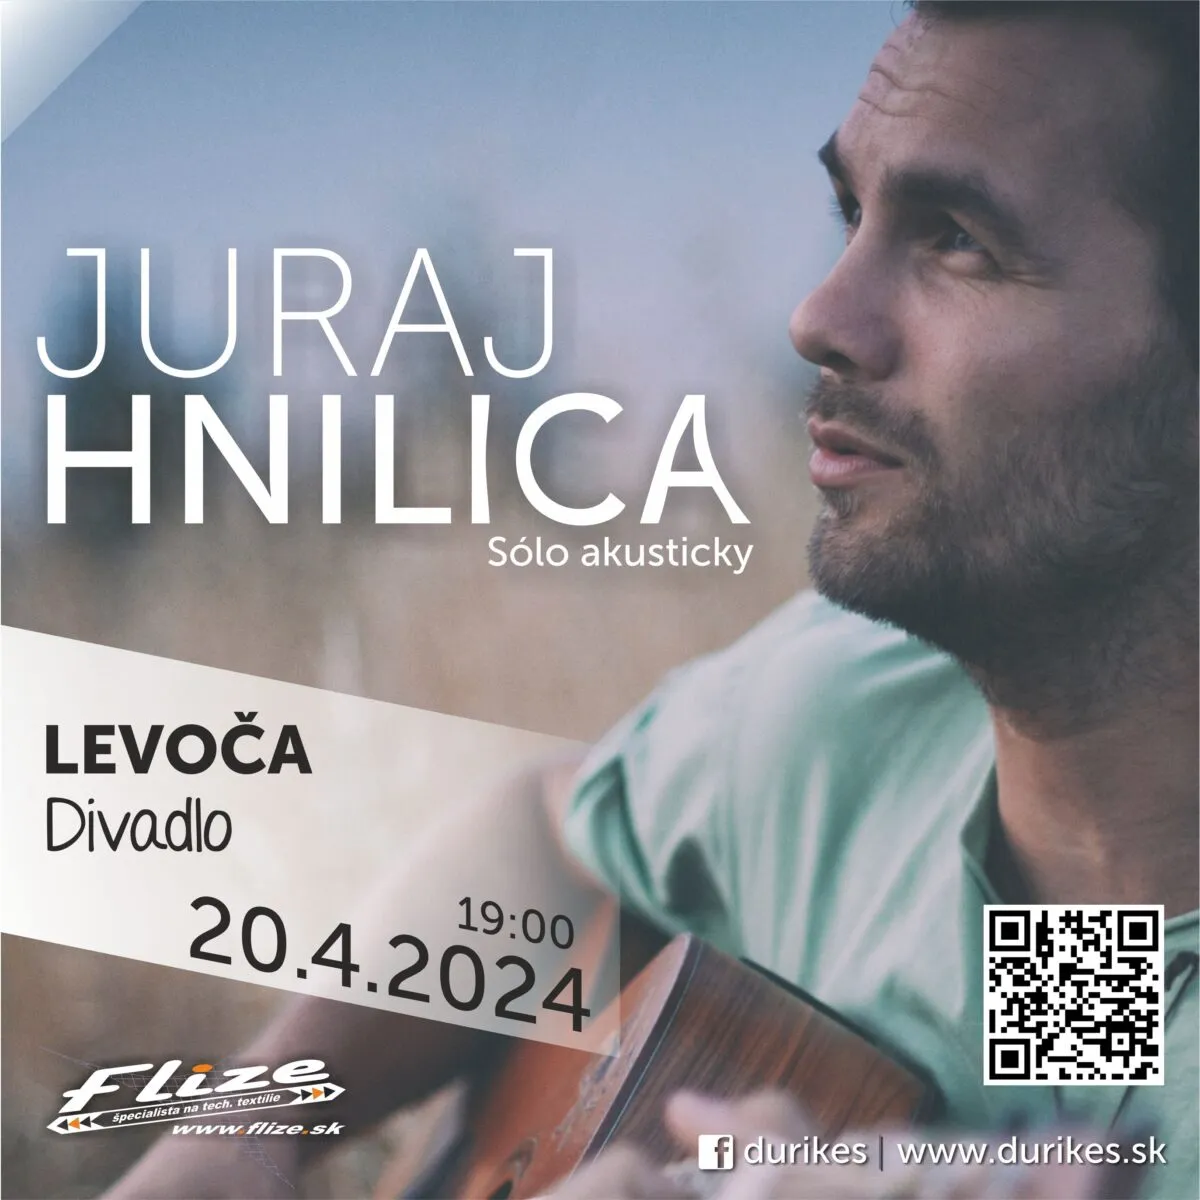 Juraj Hnilica – Sólo akusticky v Levoči